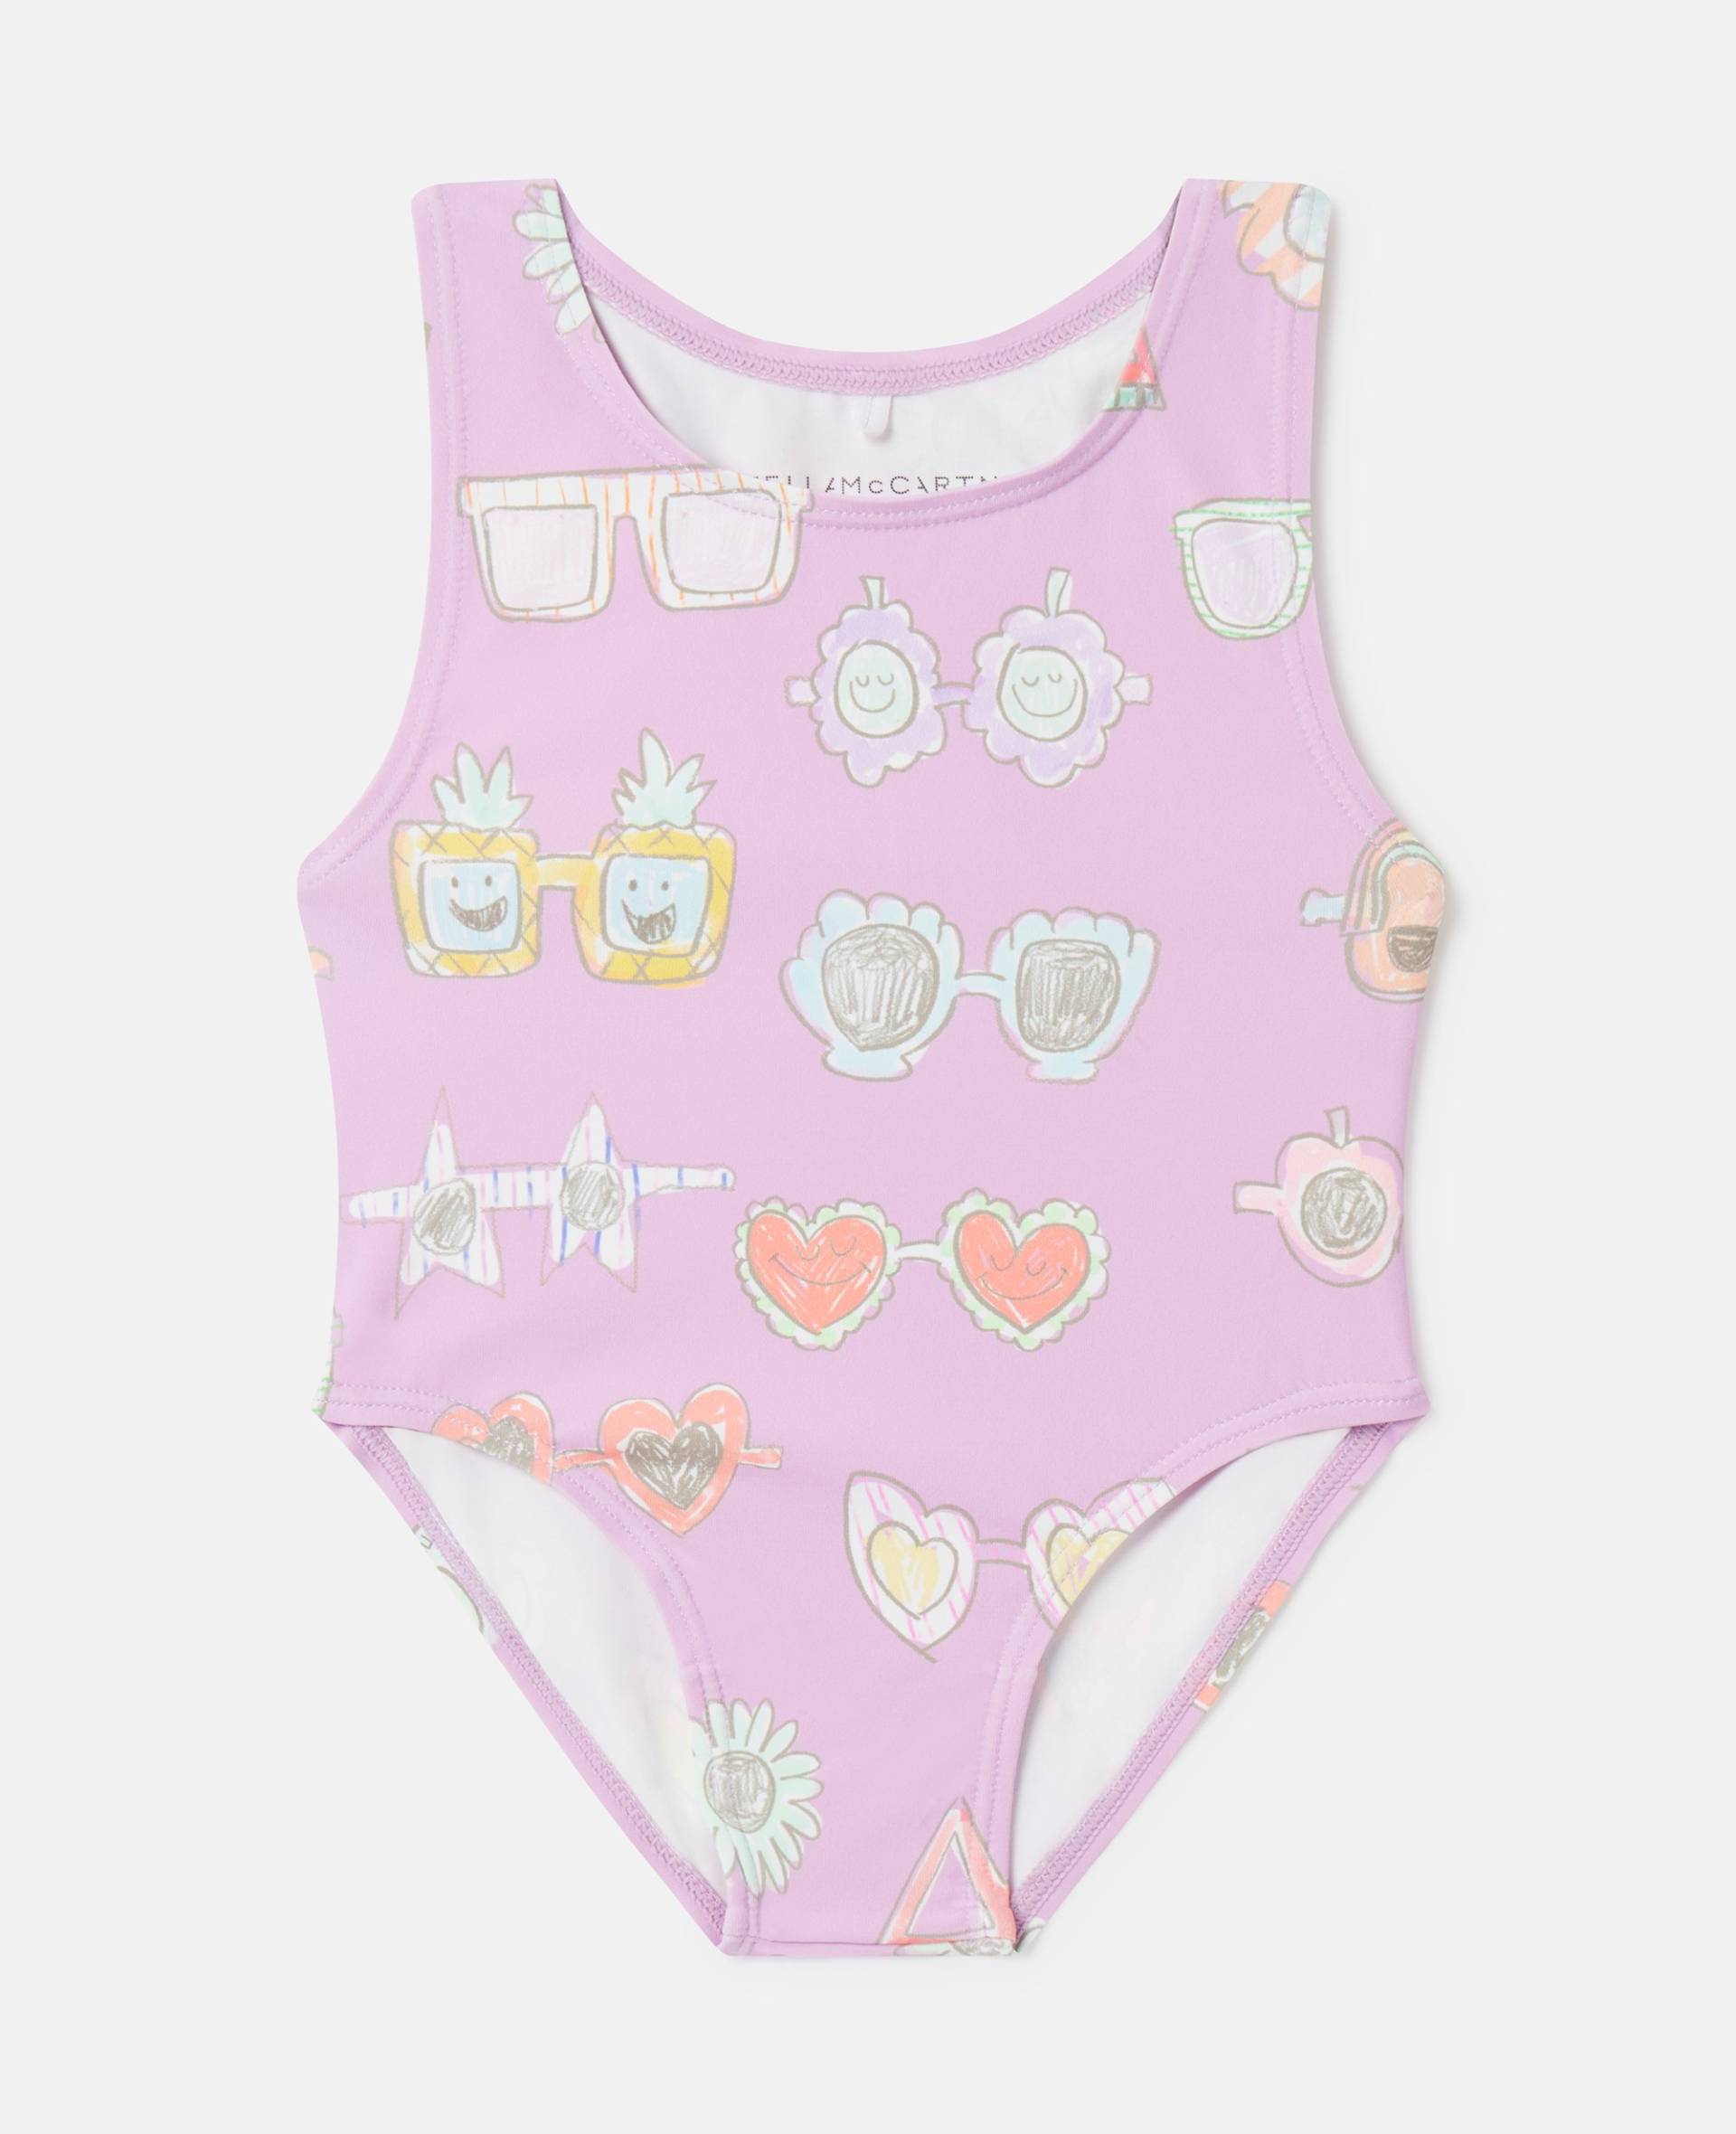 Stella McCartney - Sunglasses Doodle Print Swimsuit, Frau, Pink, Größe: 6m von Stella McCartney